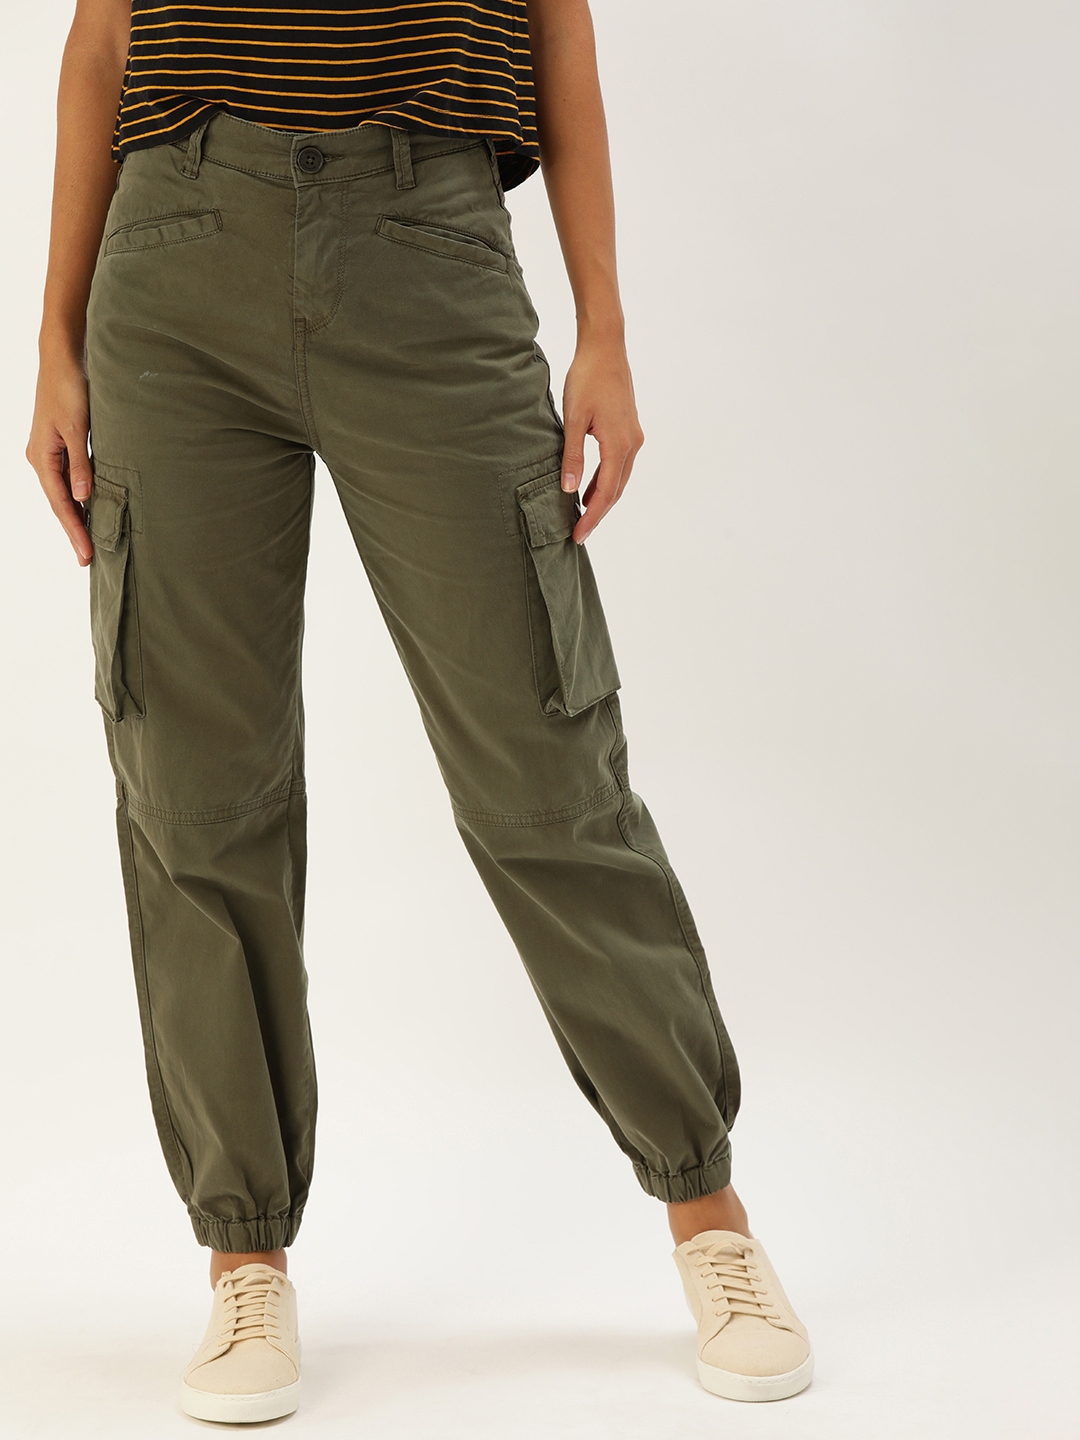 Buy Women Olive Green Regular Fit Solid Joggers  Trousers for Women   Sassafrasin